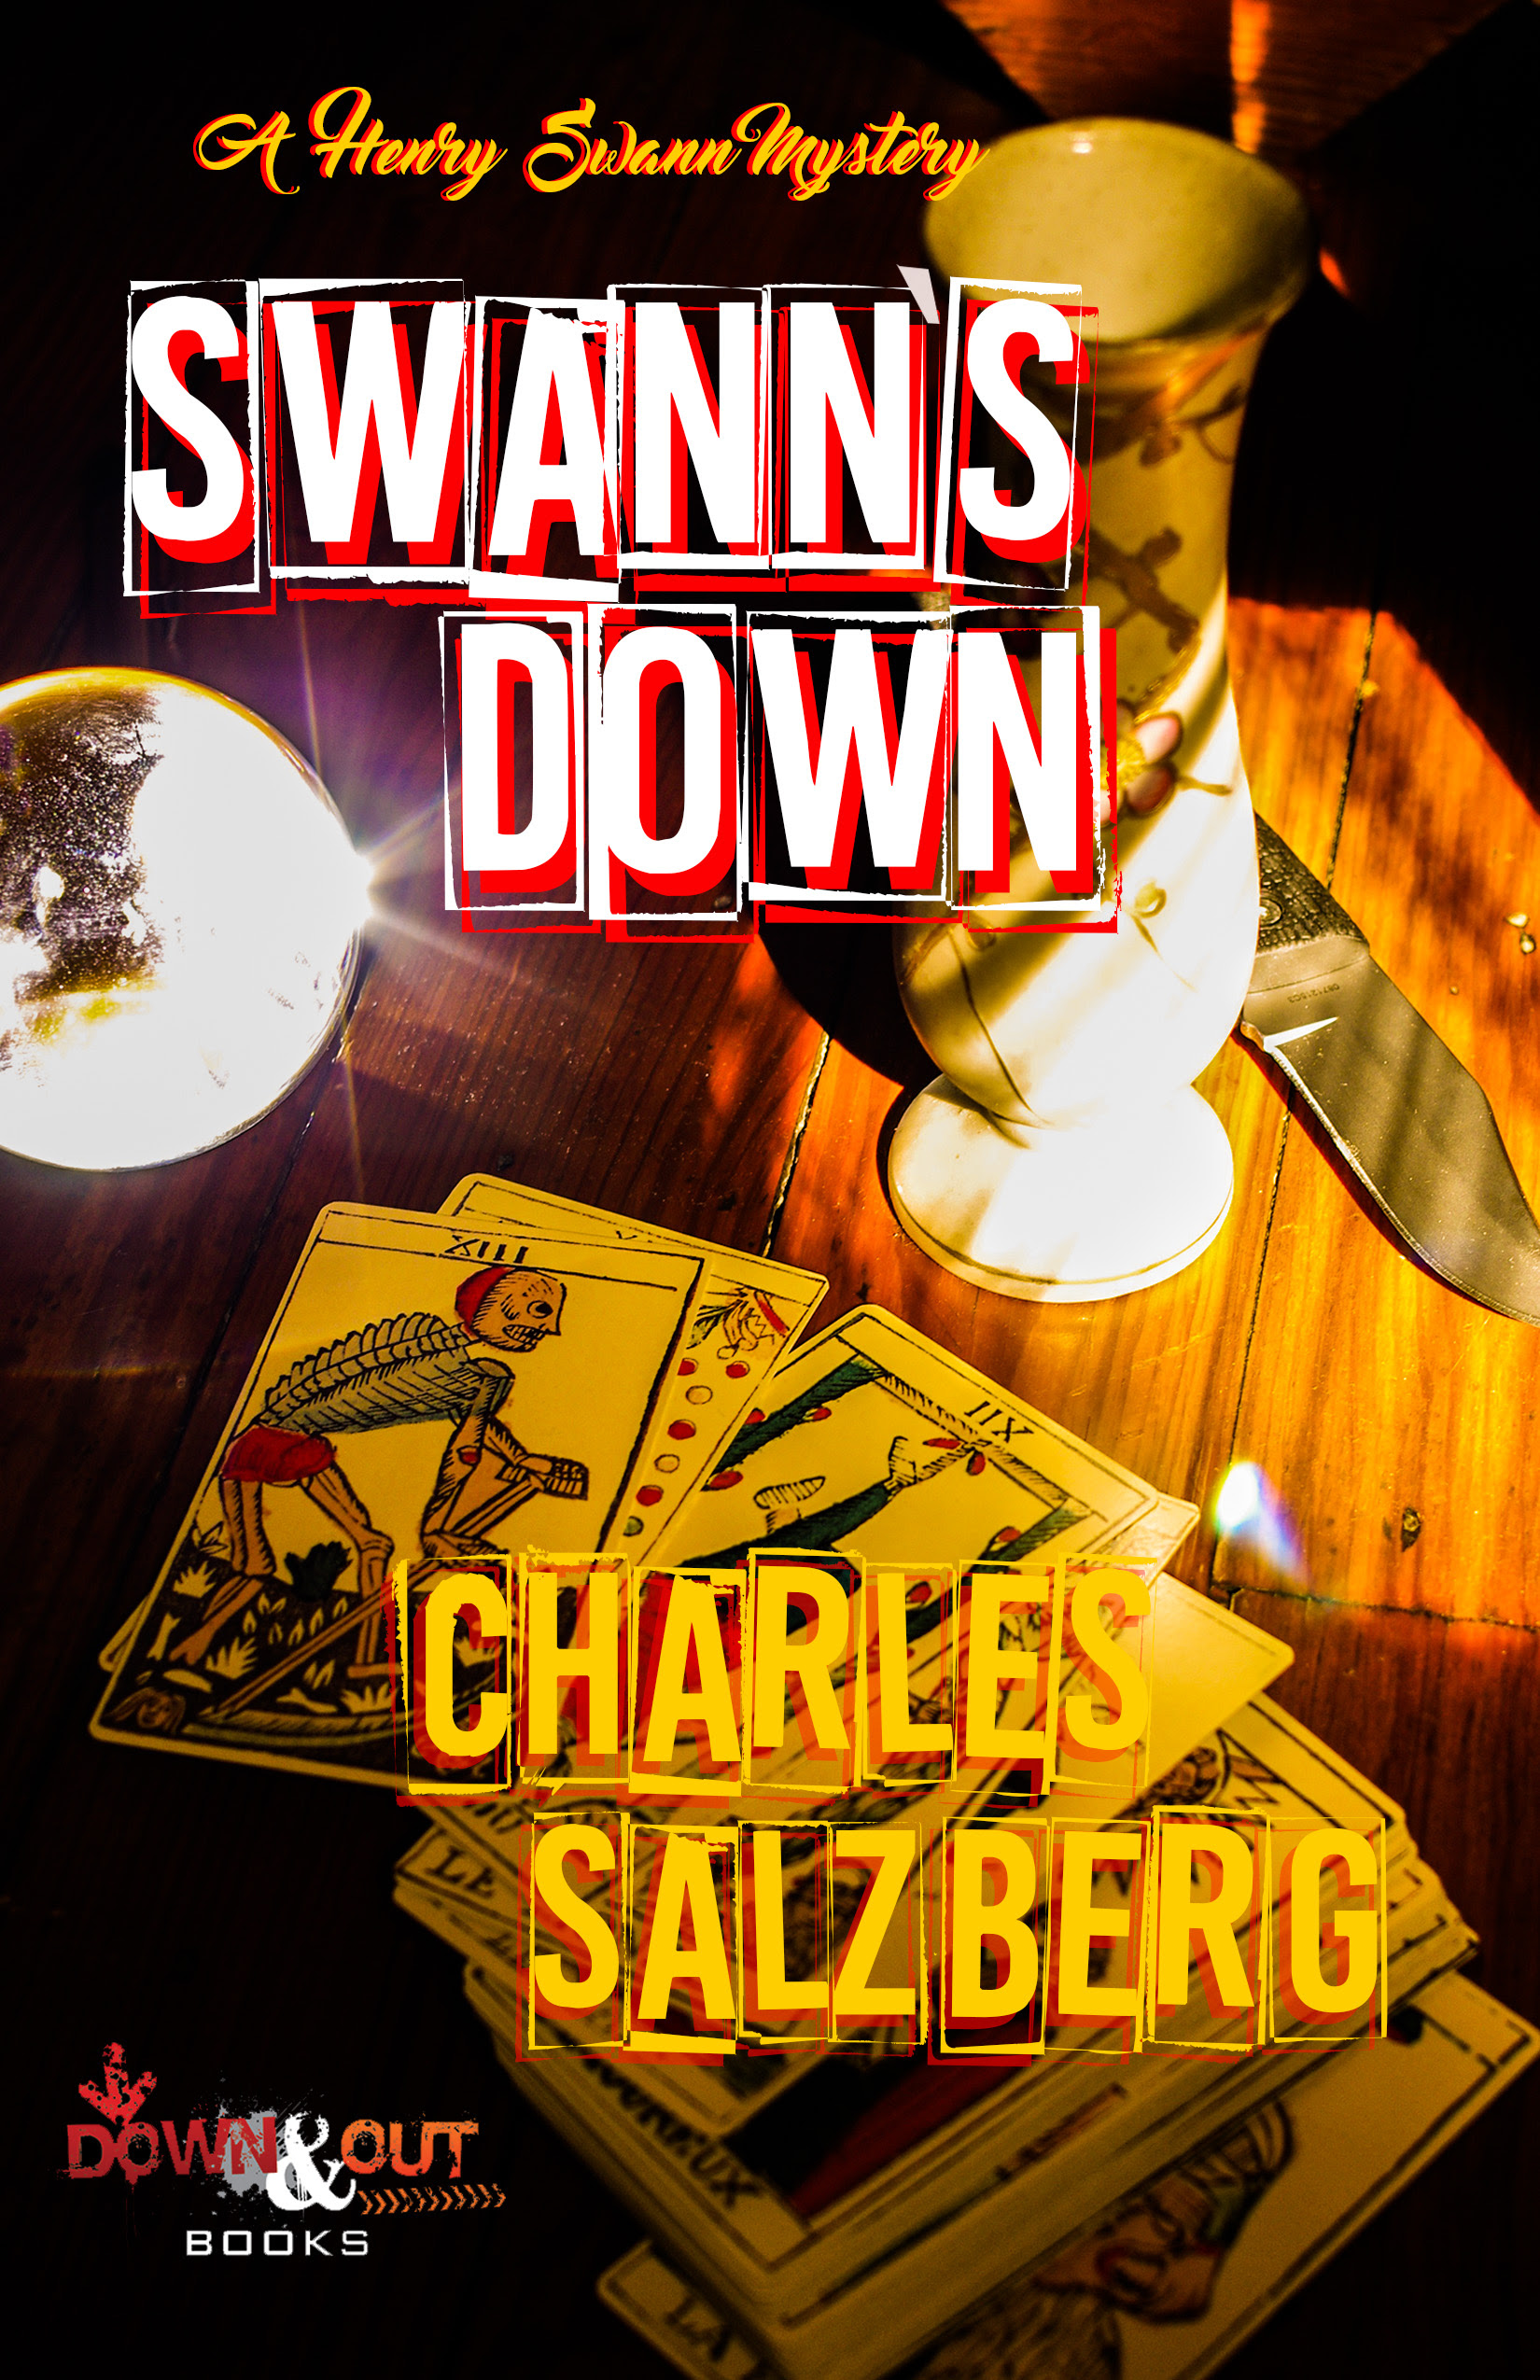 Swann's Down by Charles Salzberg